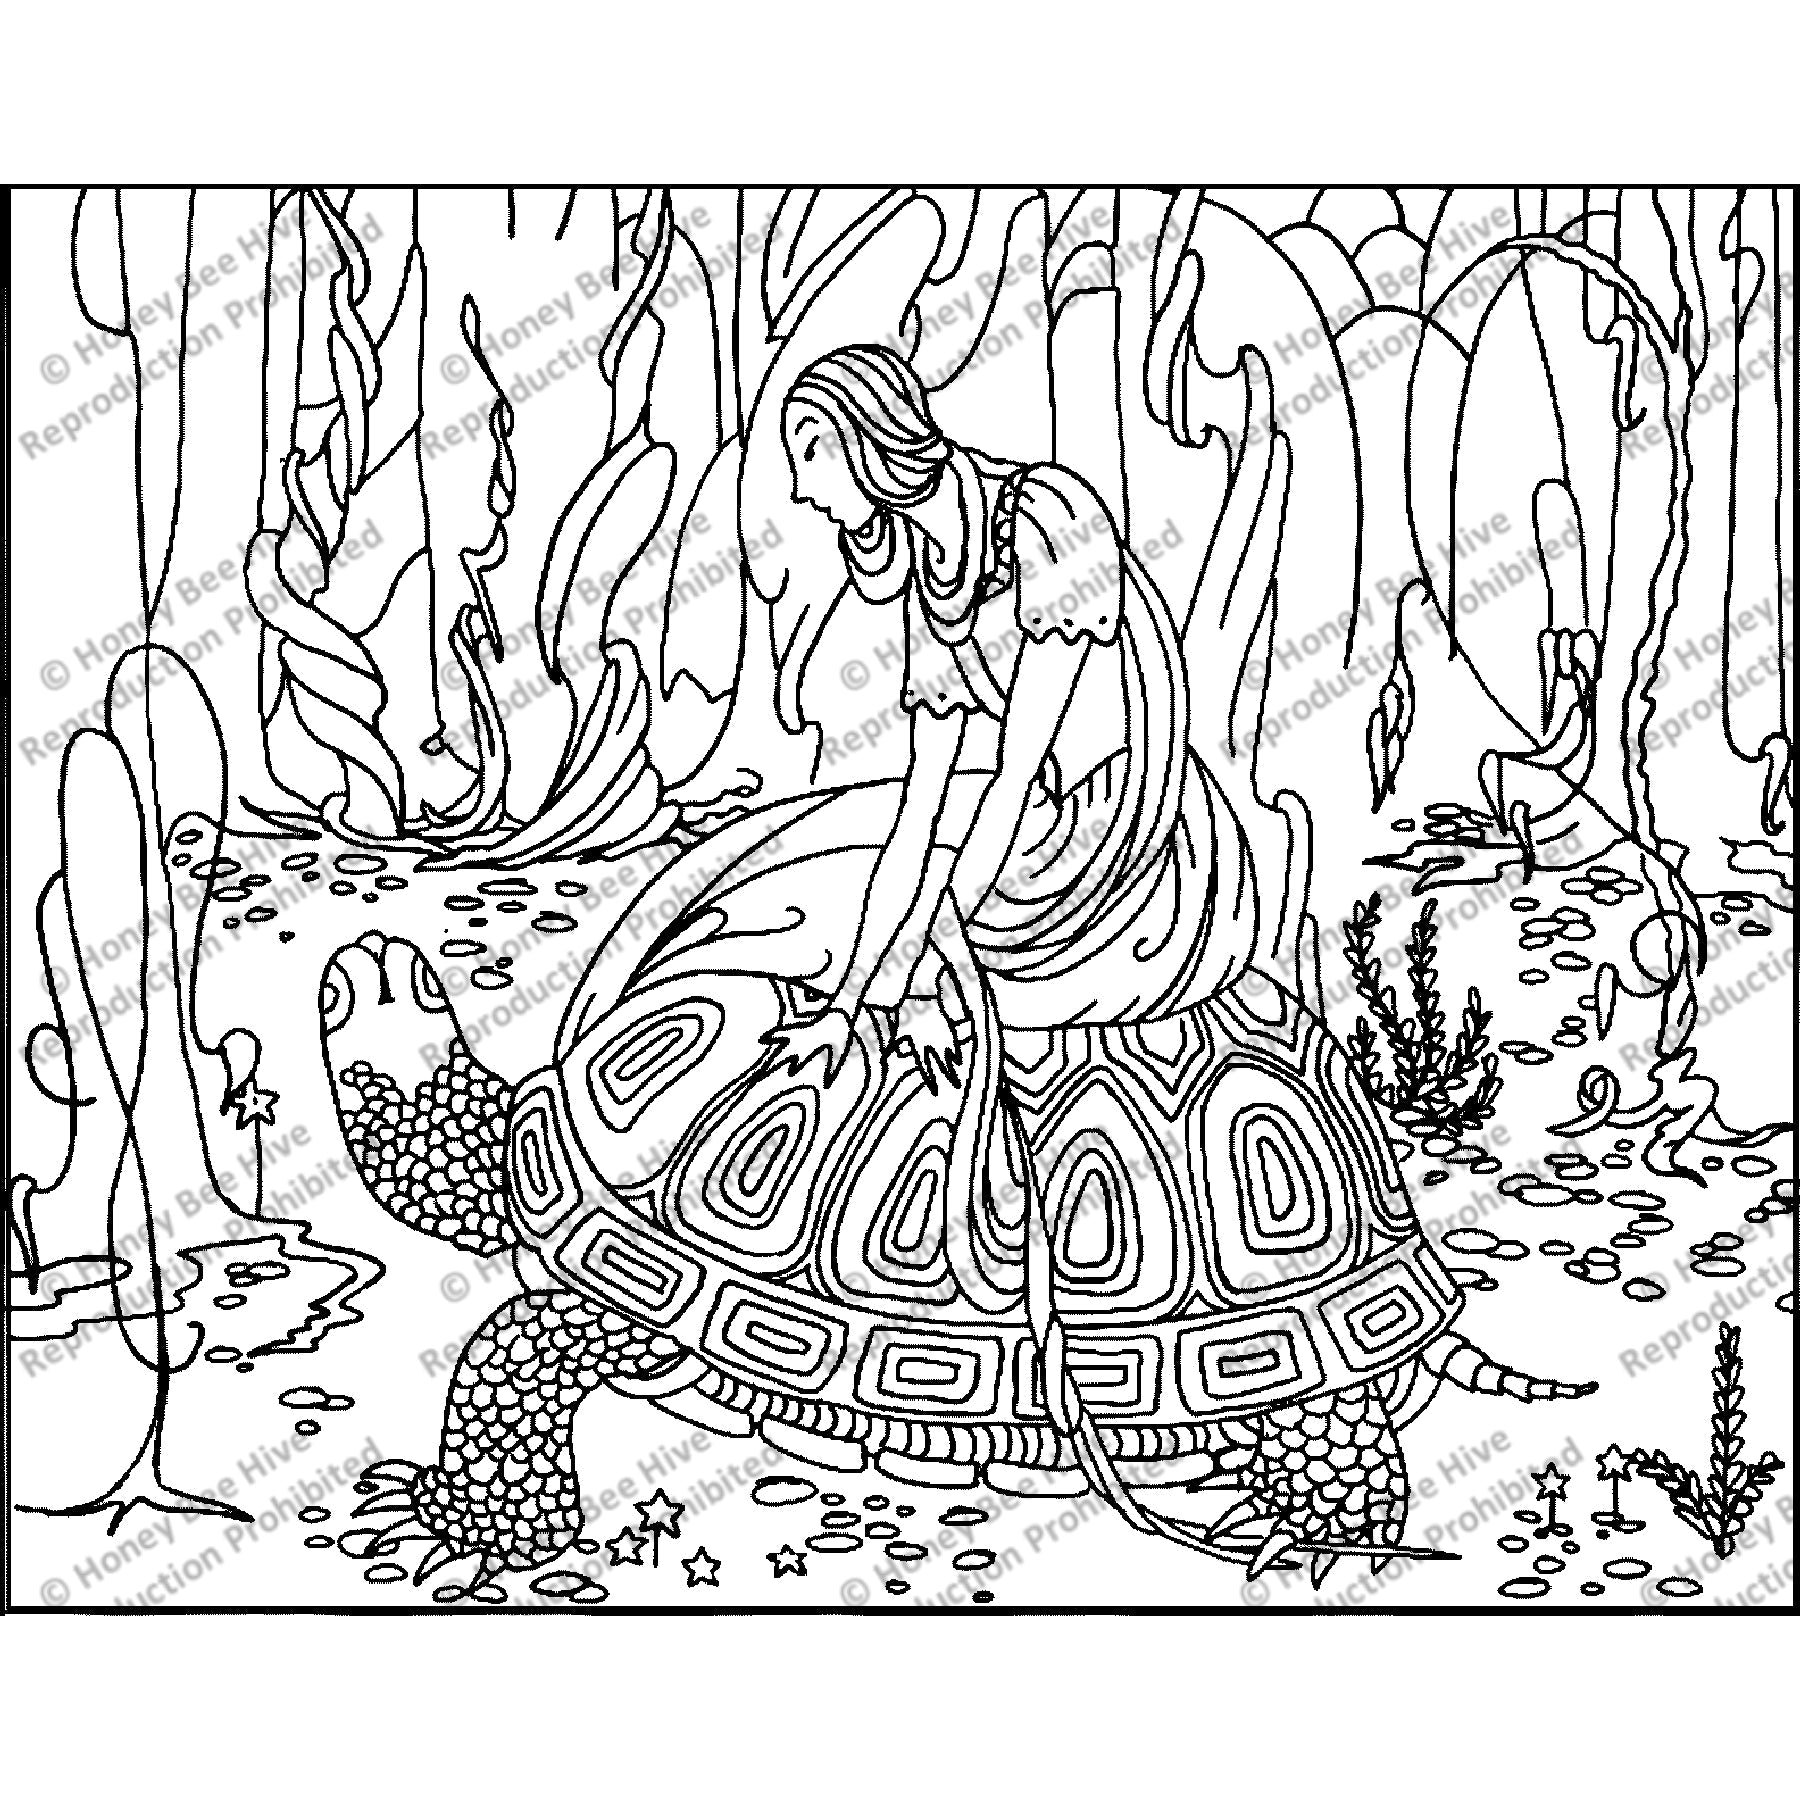 Blondine and the Tortoise, ill. Virginia Frances Sterrett, 1919, rug hooking pattern